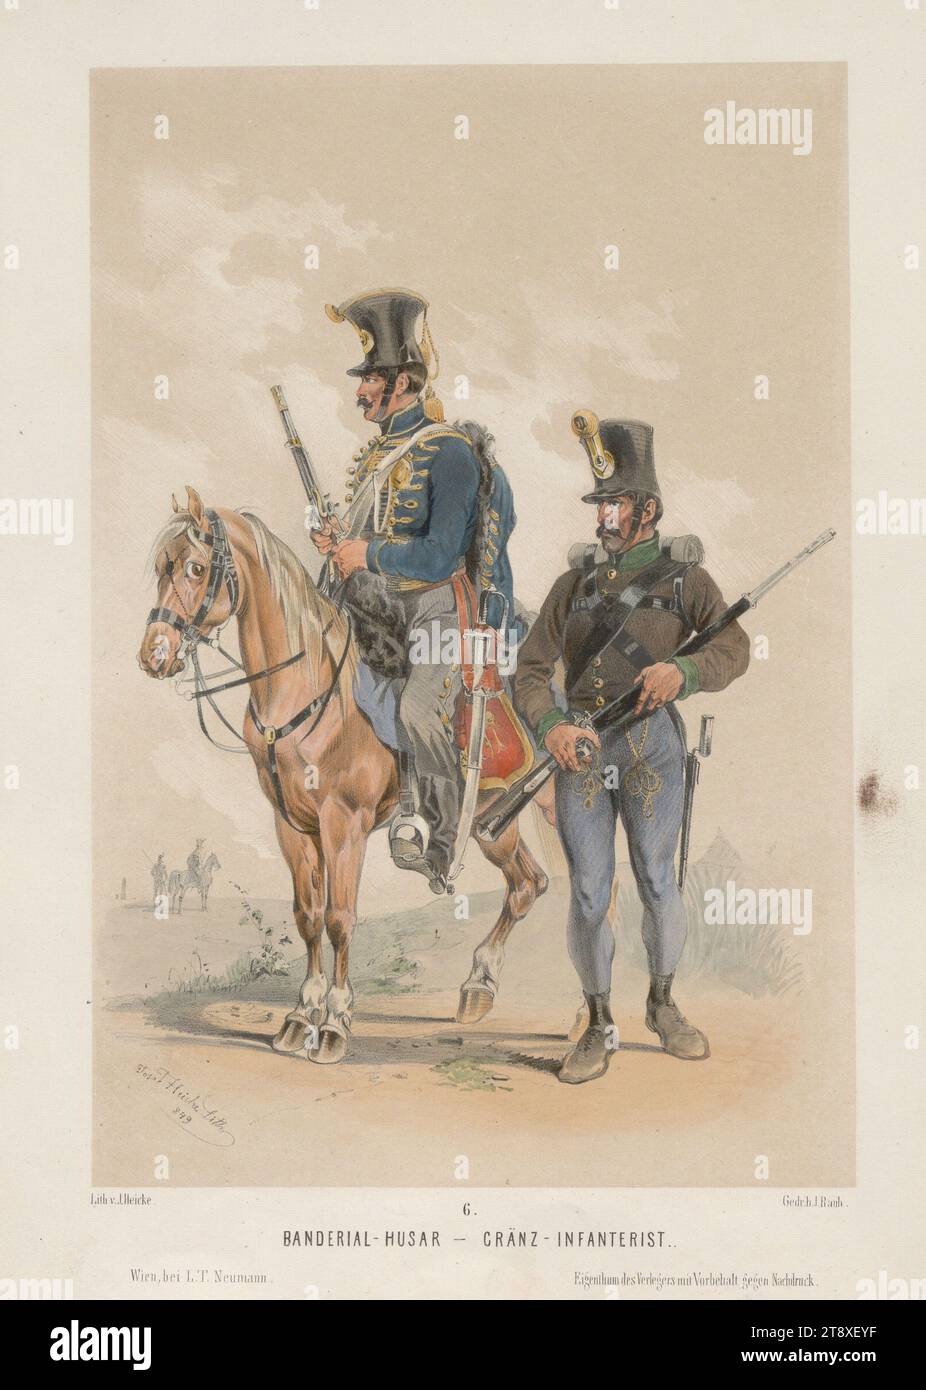 BANDERIAL-HUSAR - GRÄNZ-INFANTERIST.' (in October 1848, from the series 'SERESSANER UND CROATEN gezeichnet von JOS. HEICKE.'), Joseph Heicke (1811-1861), lithographer, Johann Rauh (1803-1863), Printer, Leopold Theodor Neumann (1804-1876), publisher, 1849, paper, colorised, chalk-manner lithograph, height 29, 8 cm, width 21, 7 cm, Military, Fine Arts, Revolutions of 1848, 1849, the soldier; the soldier's life, The Vienna Collection Stock Photo